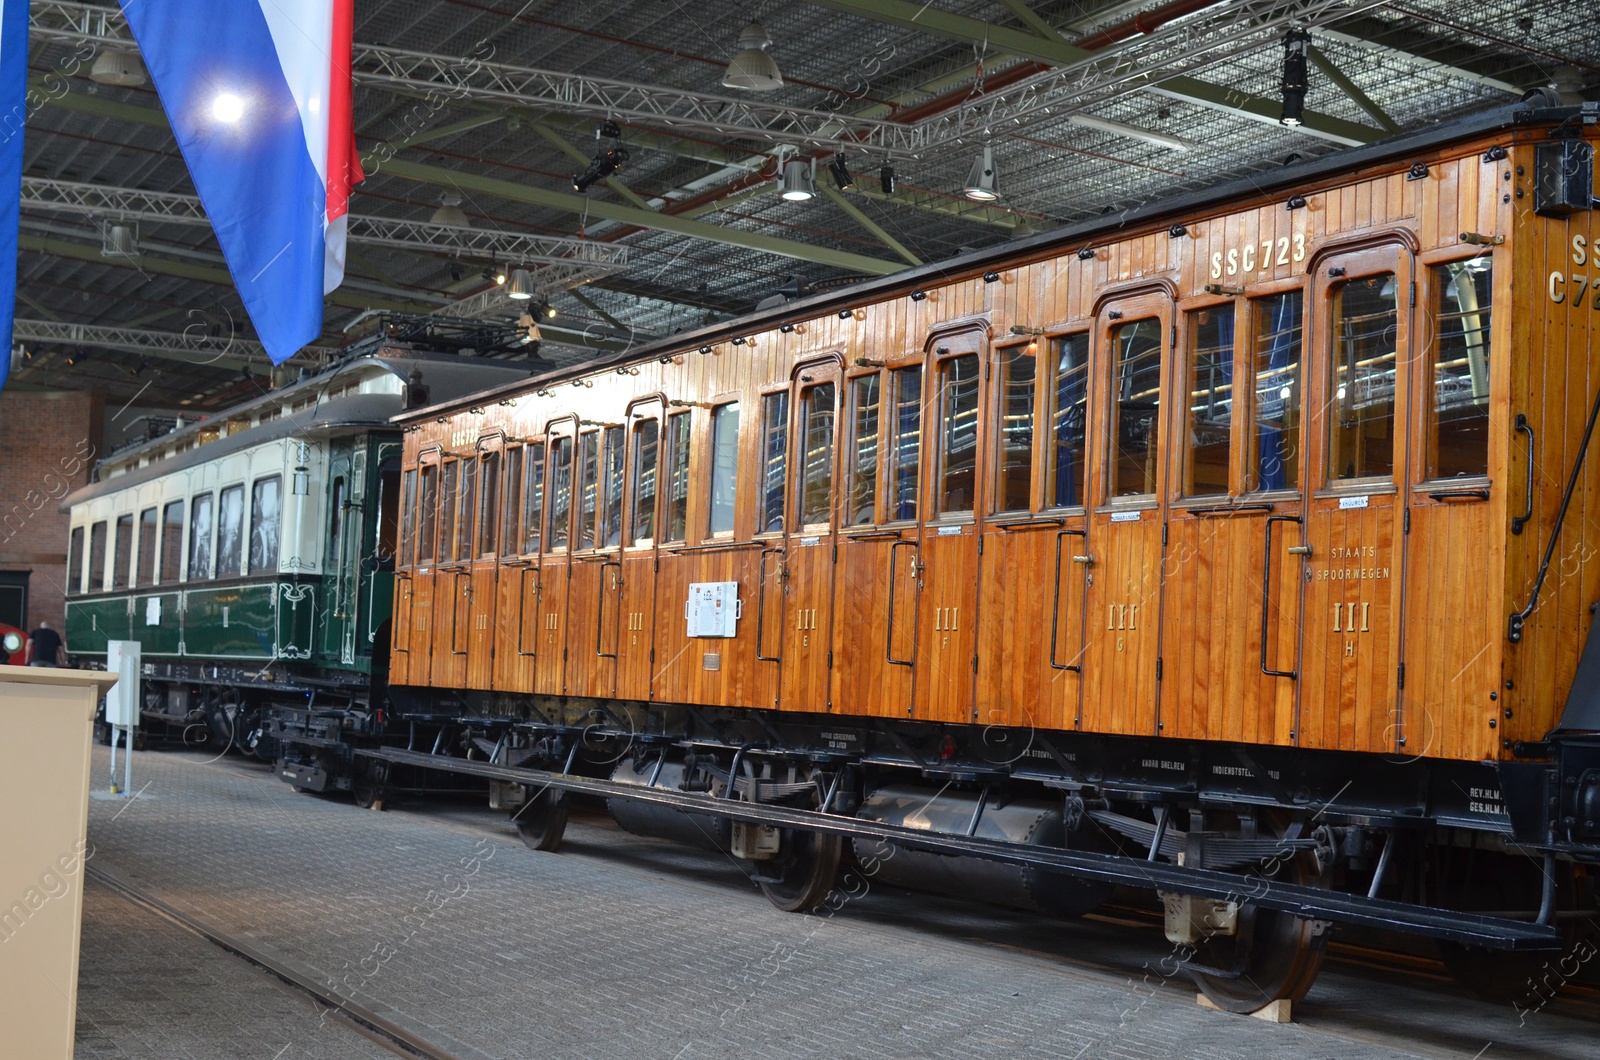 Photo of Utrecht, Netherlands - July 23, 2022: Old wagons on display in Spoorwegmuseum